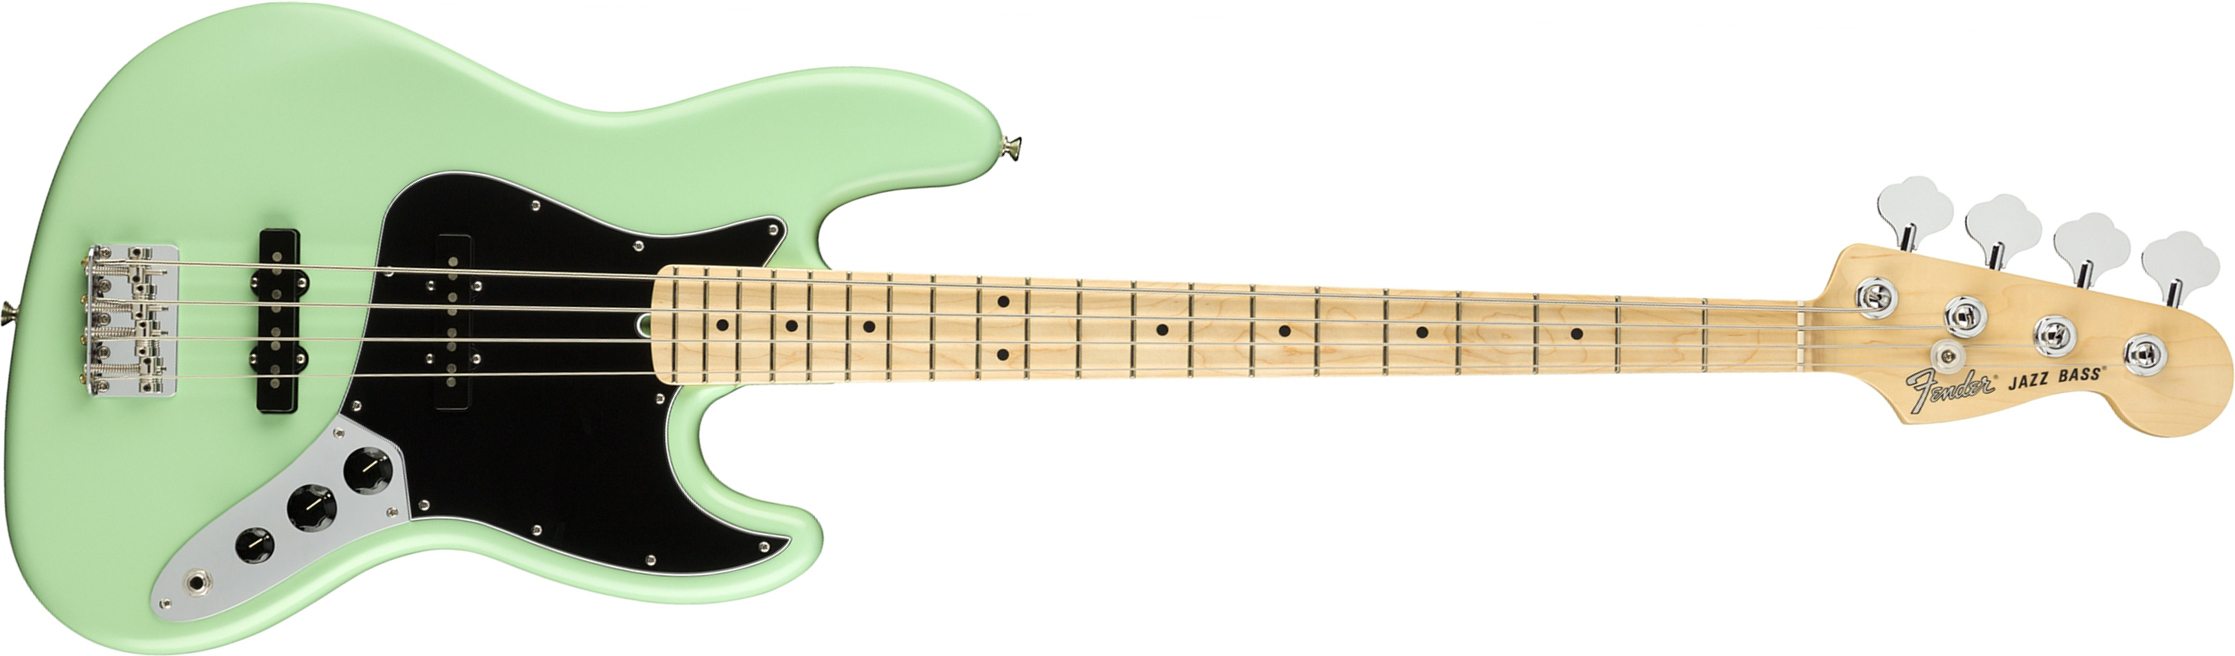 Fender Jazz Bass American Performer Usa Mn - Satin Surf Green - Solid body elektrische bas - Main picture